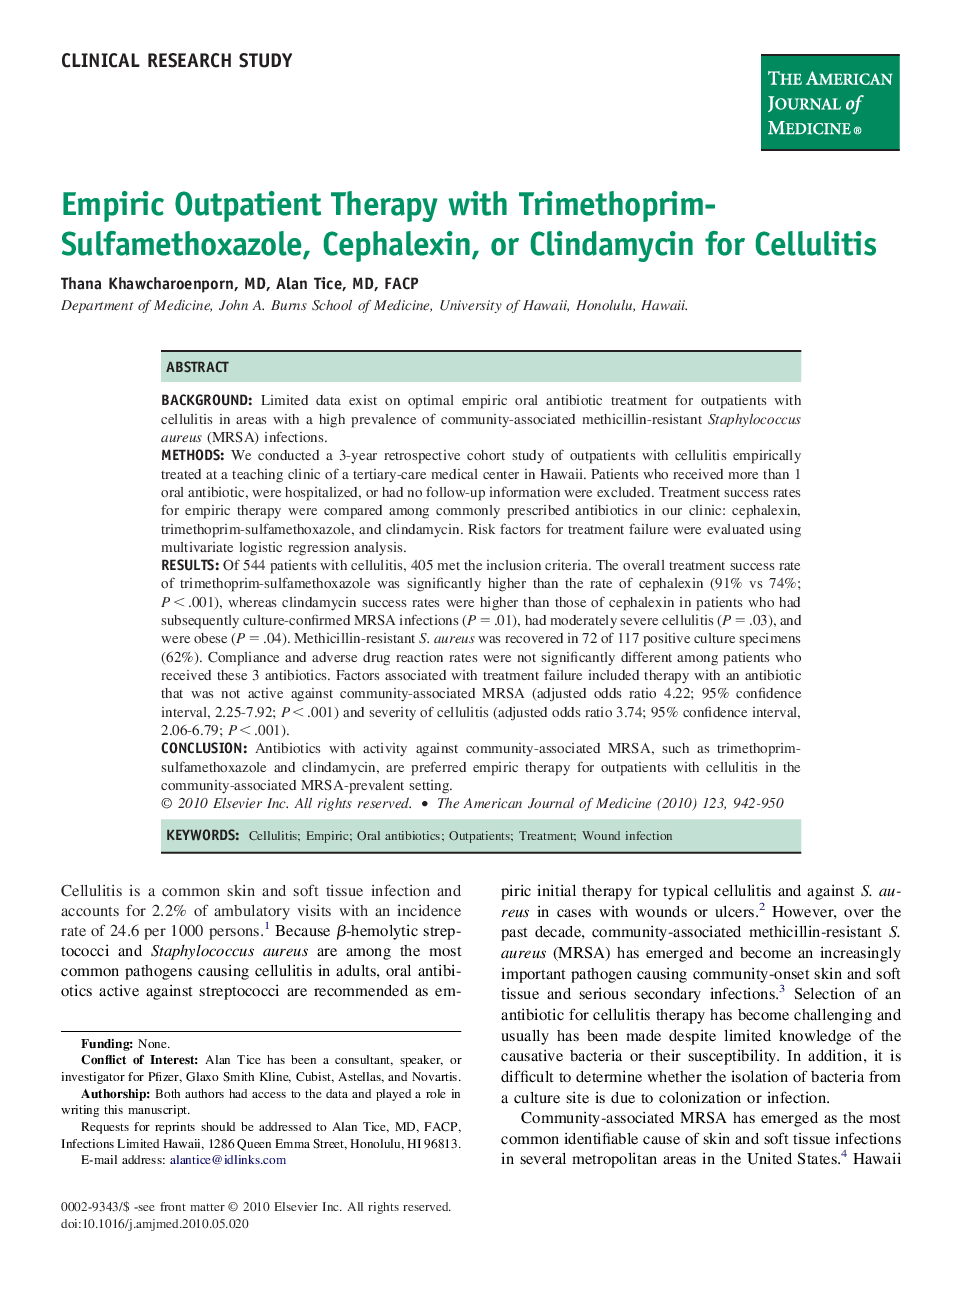 Empiric Outpatient Therapy with Trimethoprim-Sulfamethoxazole, Cephalexin, or Clindamycin for Cellulitis 